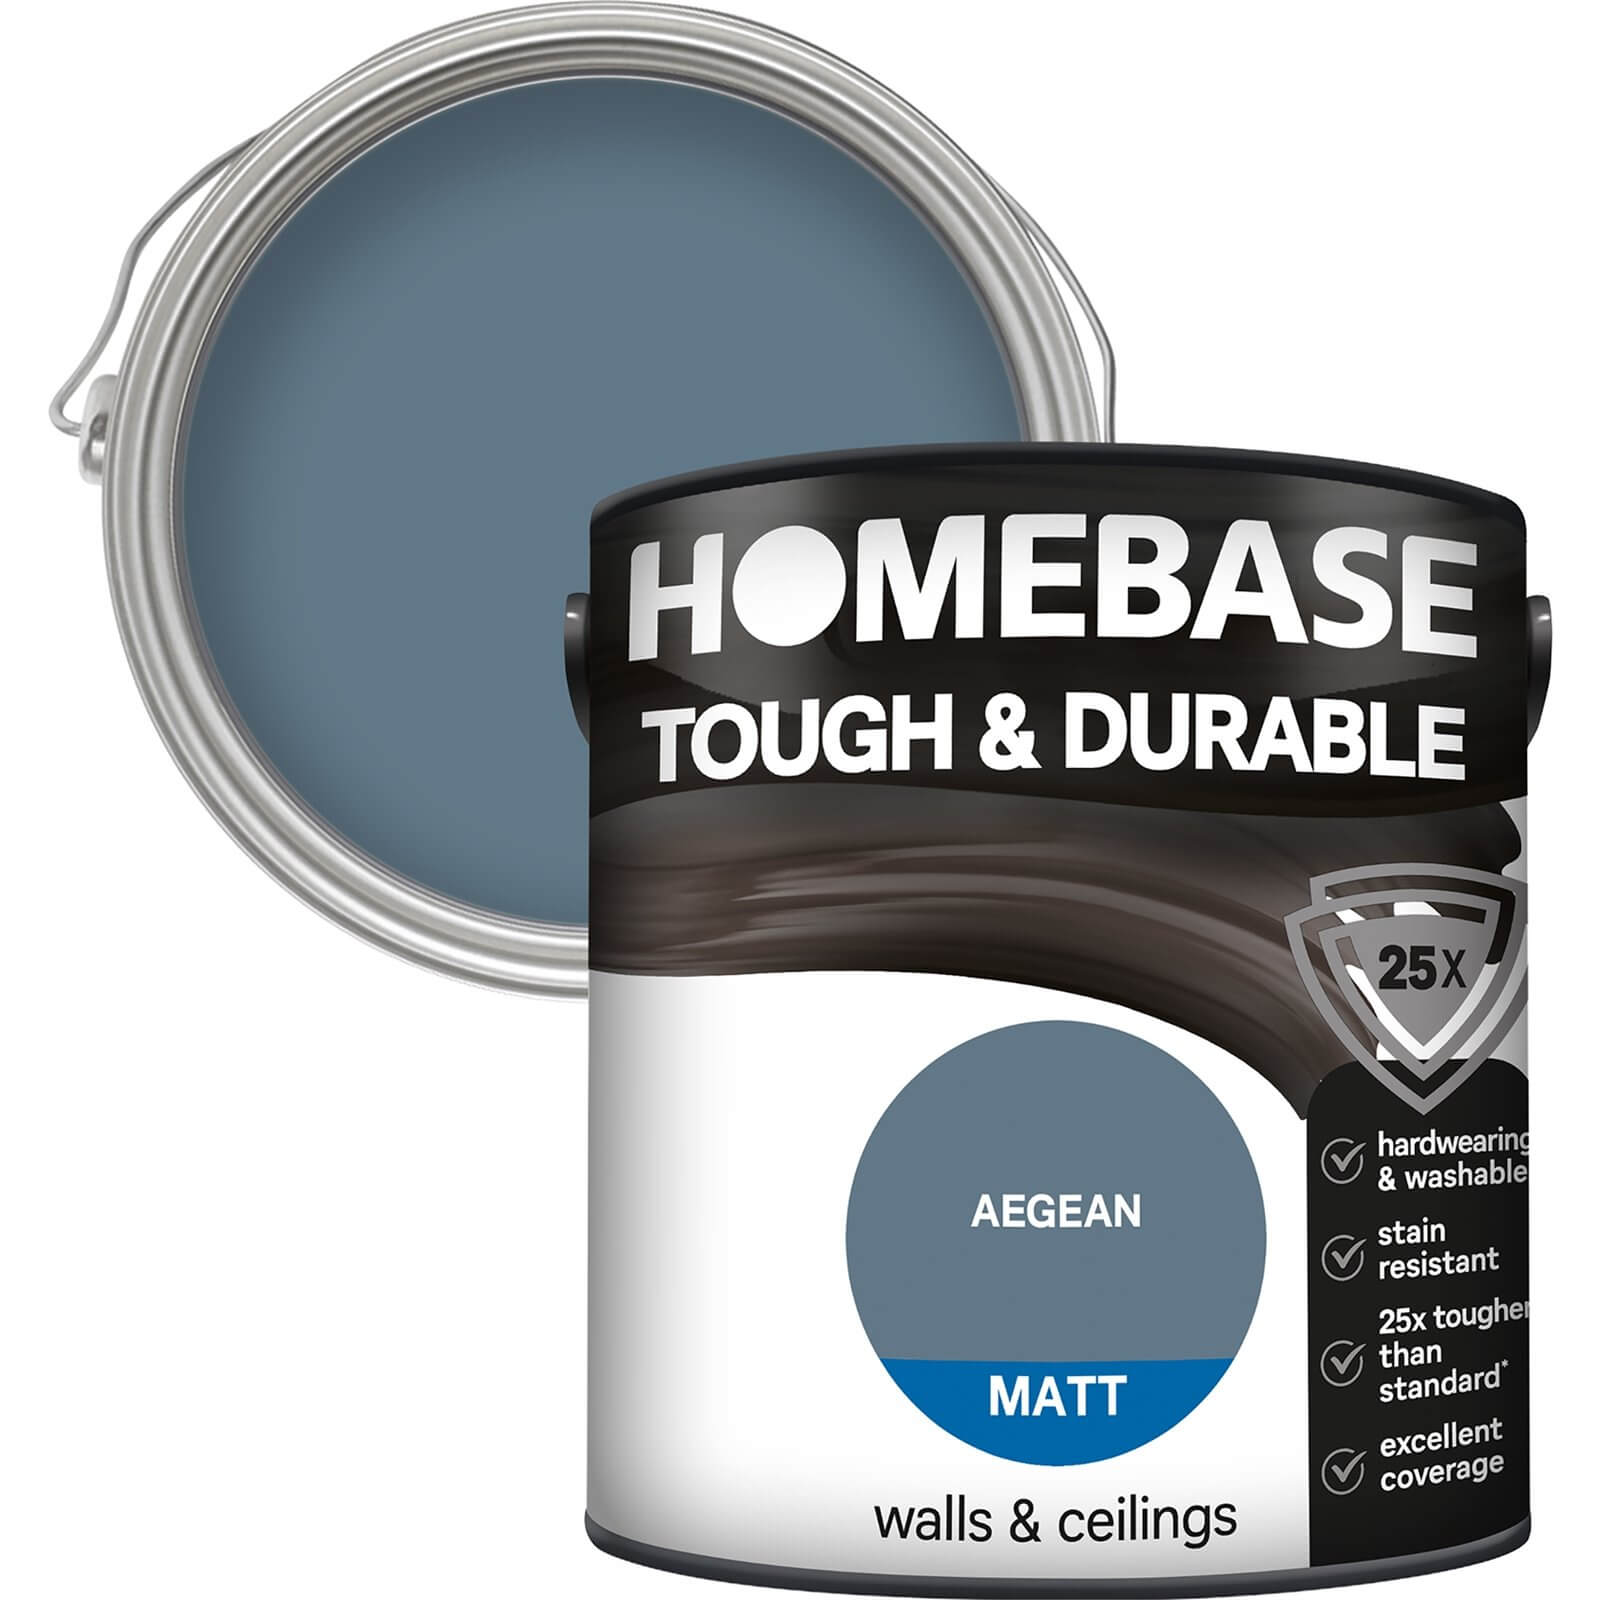 Homebase Tough & Durable Matt Emulsion Paint Aegean - 2.5L